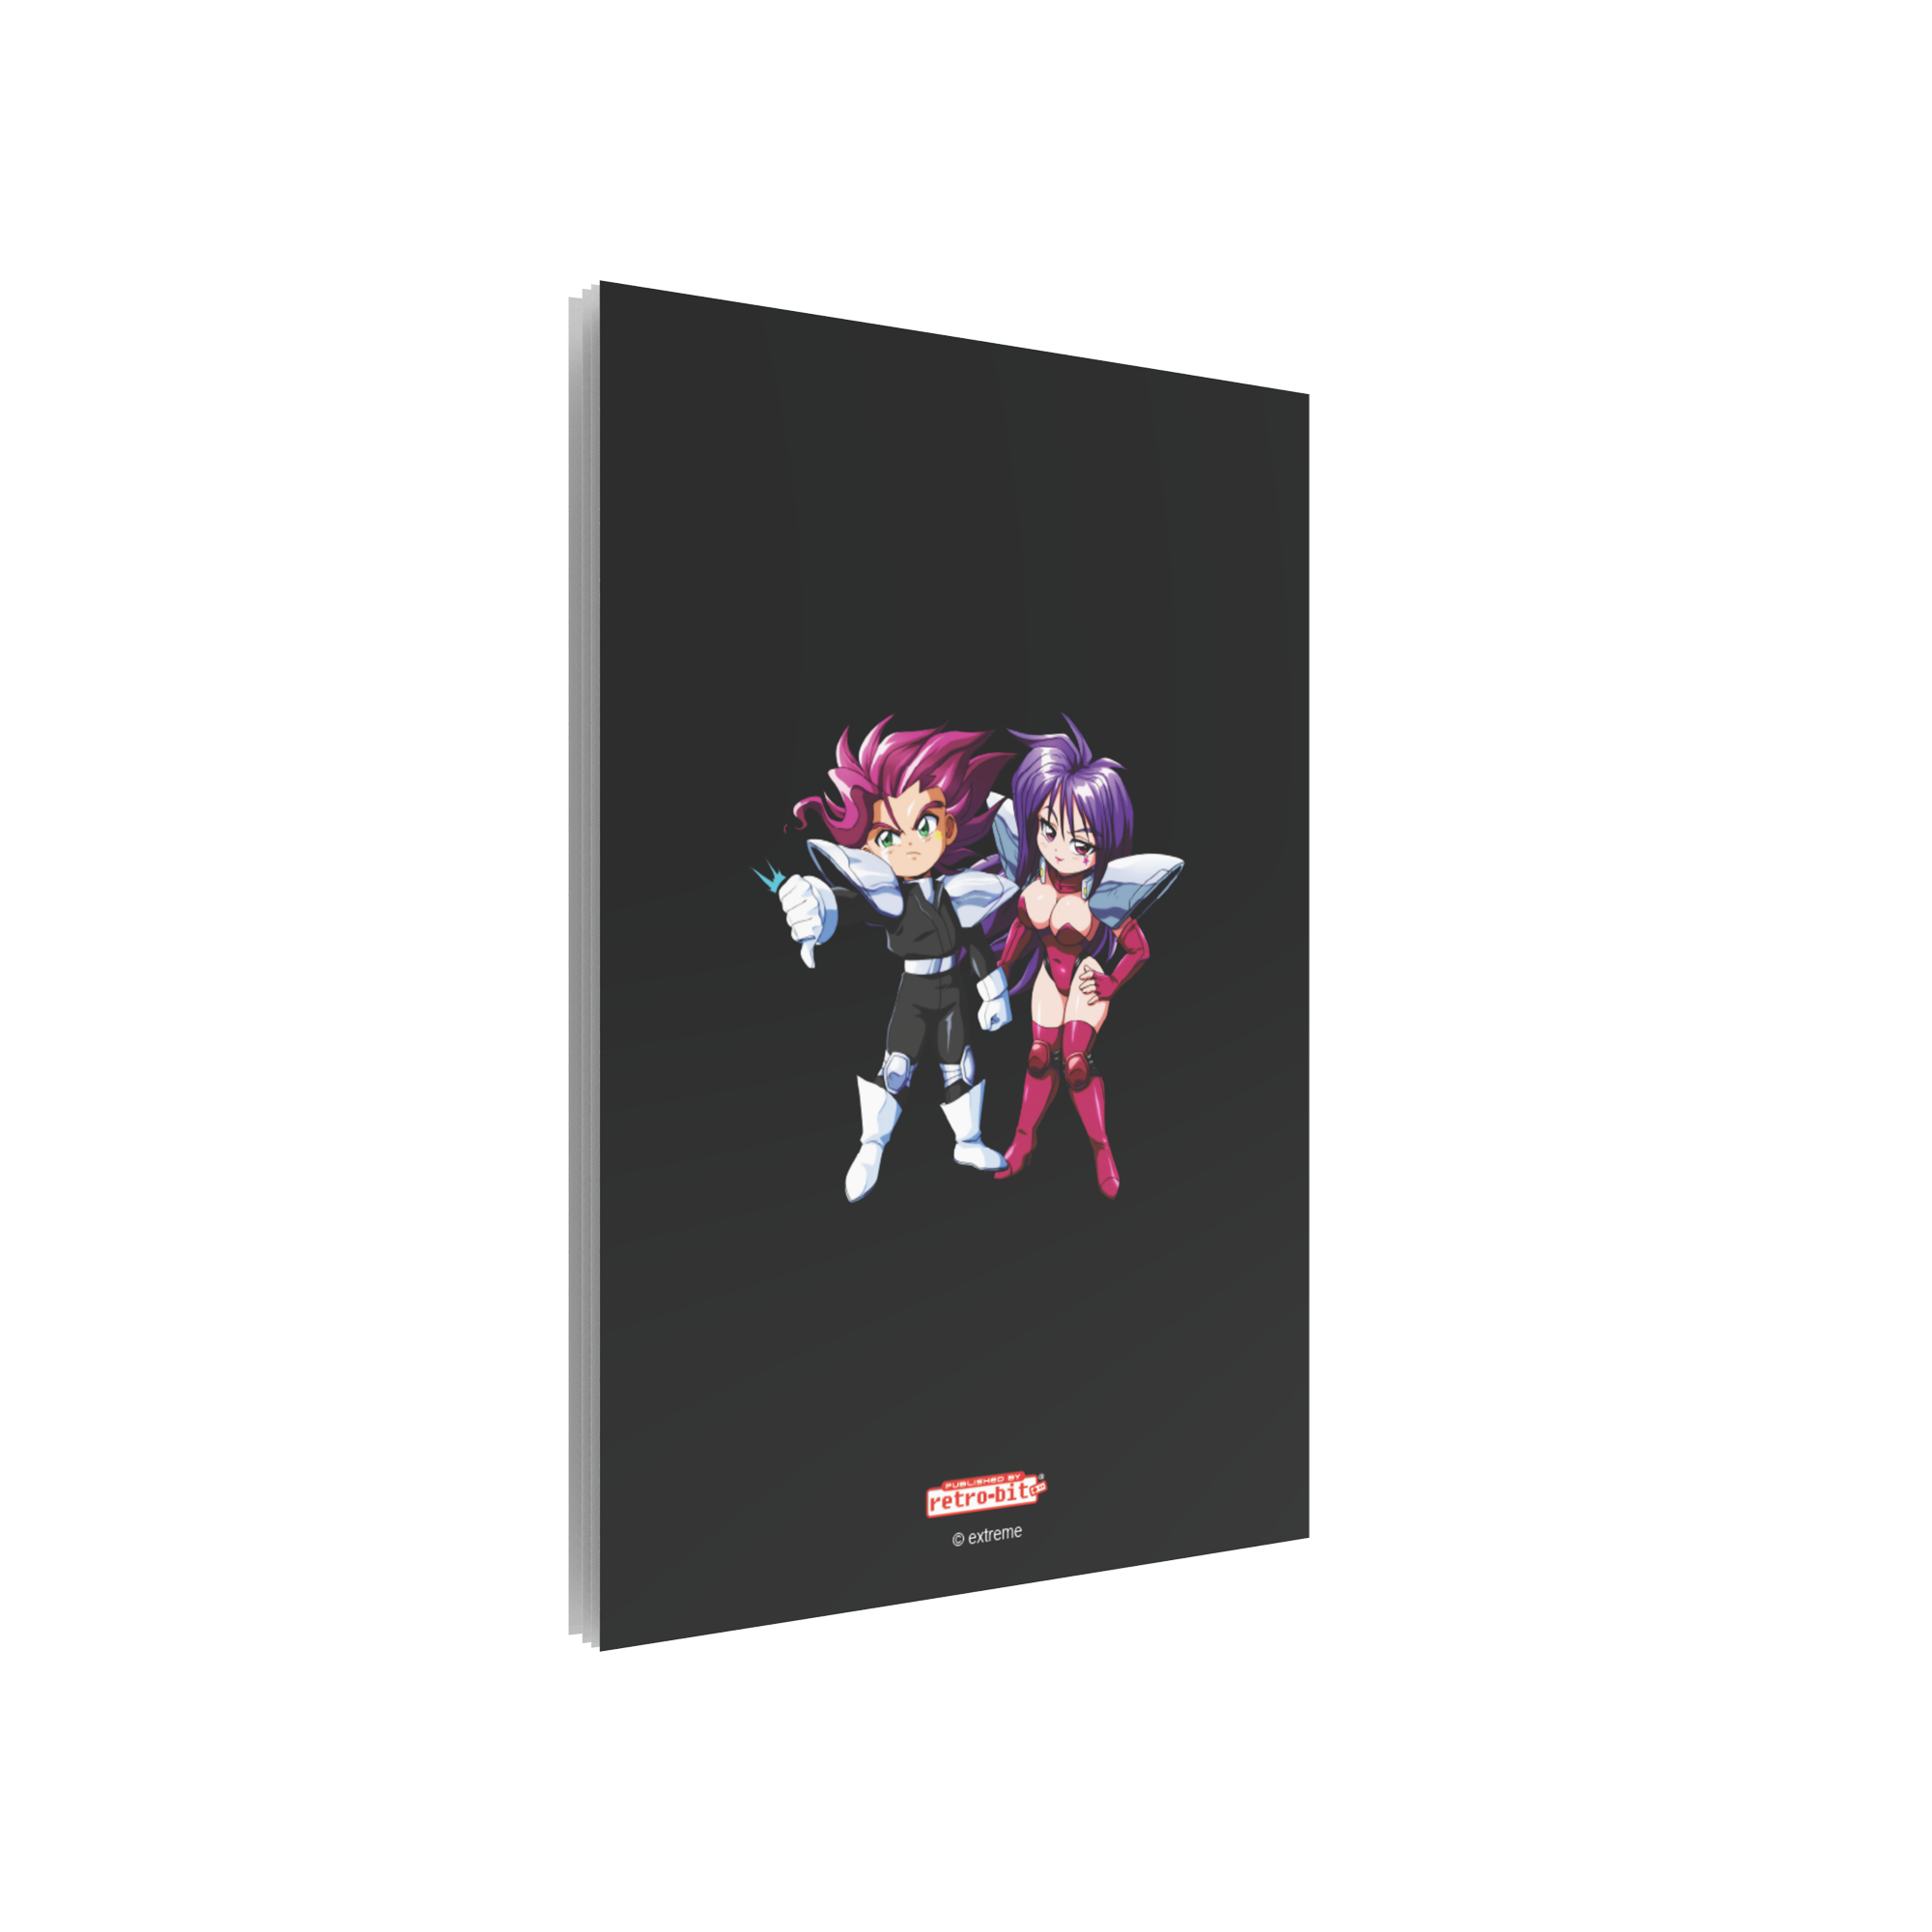 Shockman Zero Collectors Edition SNES PAL (Schibibinman Zero) - PAL Super Nintendo Cartridge - Retro-bit Publishing